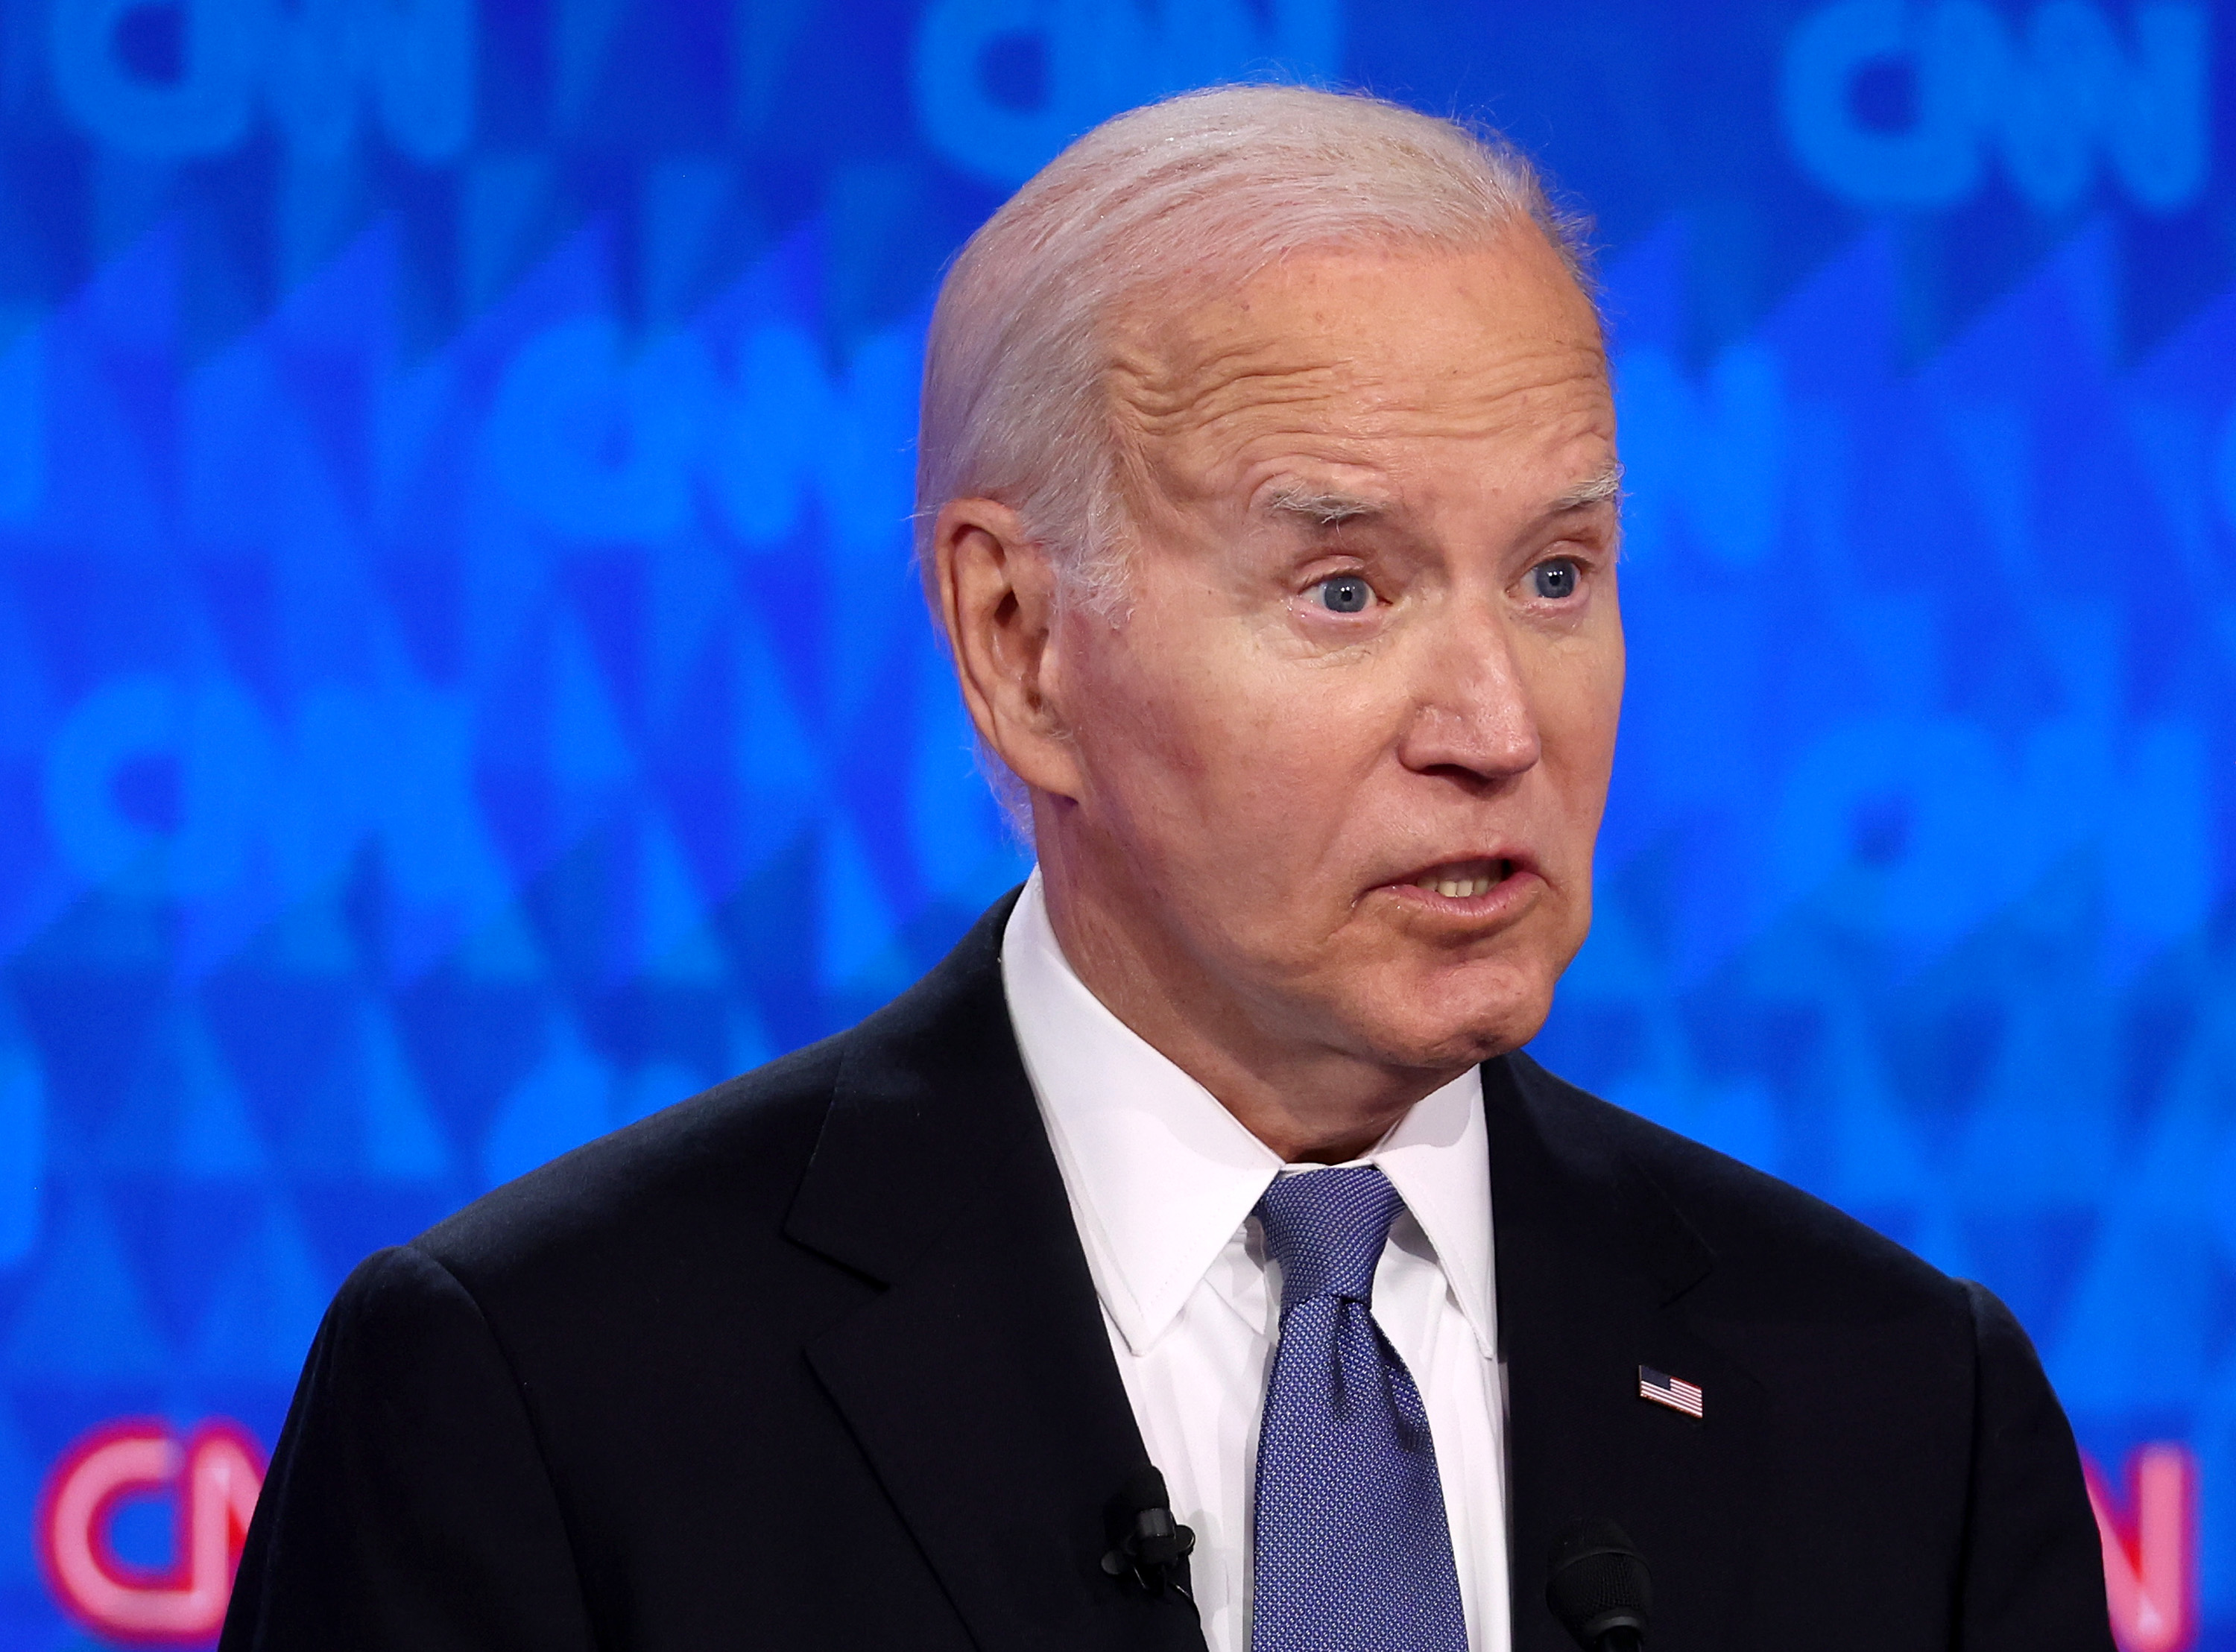 Joe Biden’s voice during the debate raises eyebrows